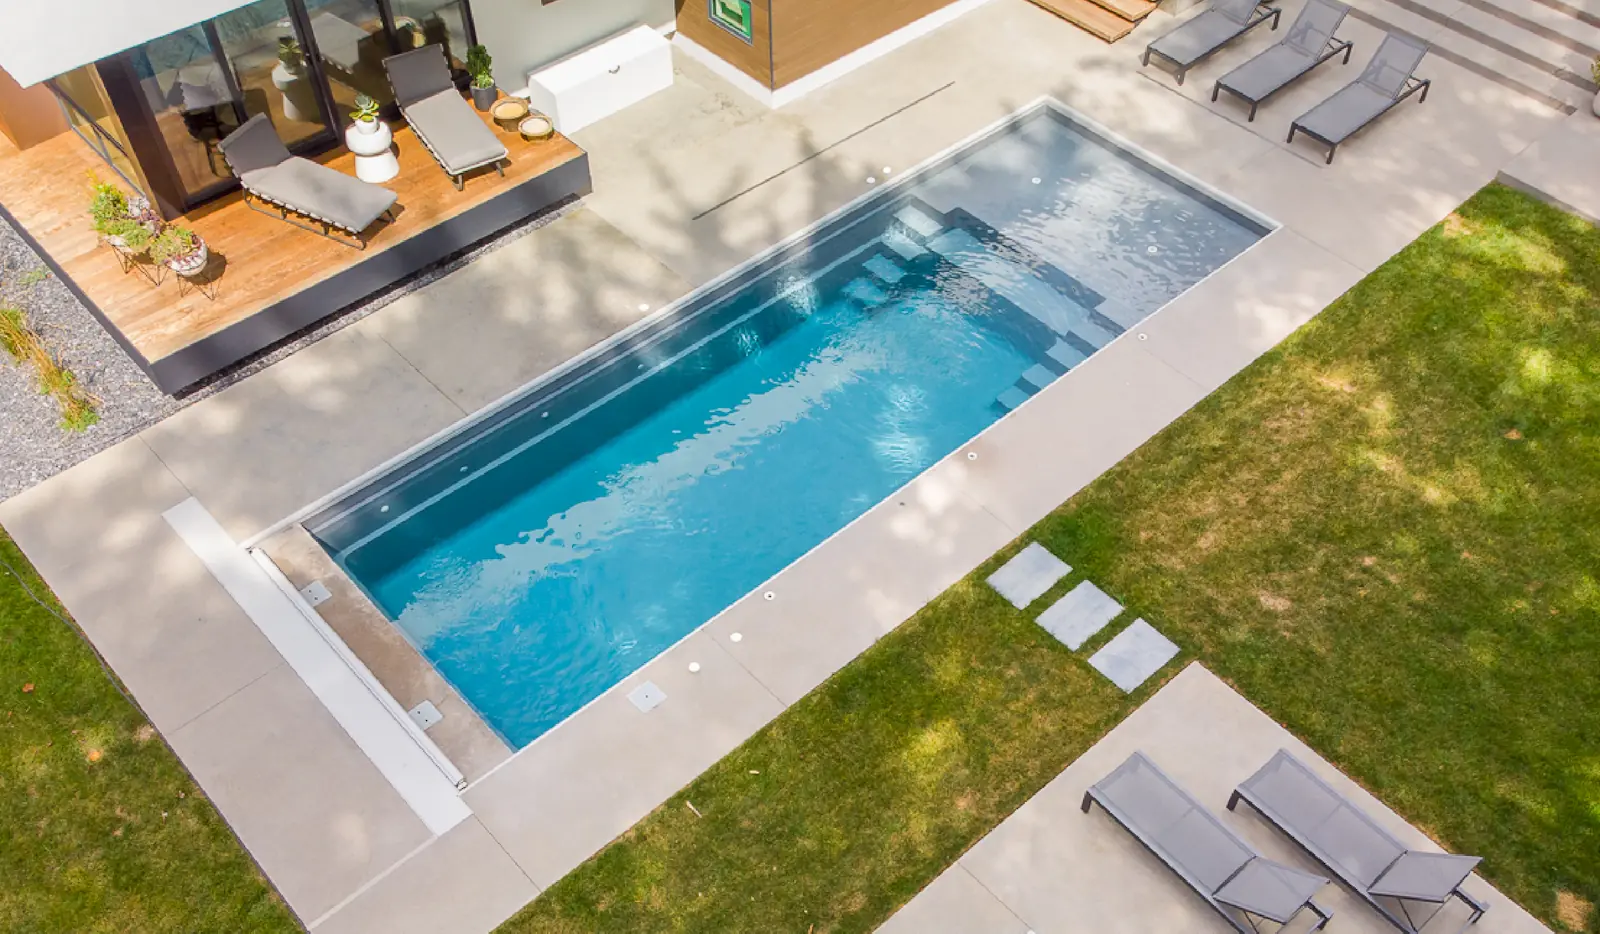 Customizing your Backyard Pool from Imagine Pools